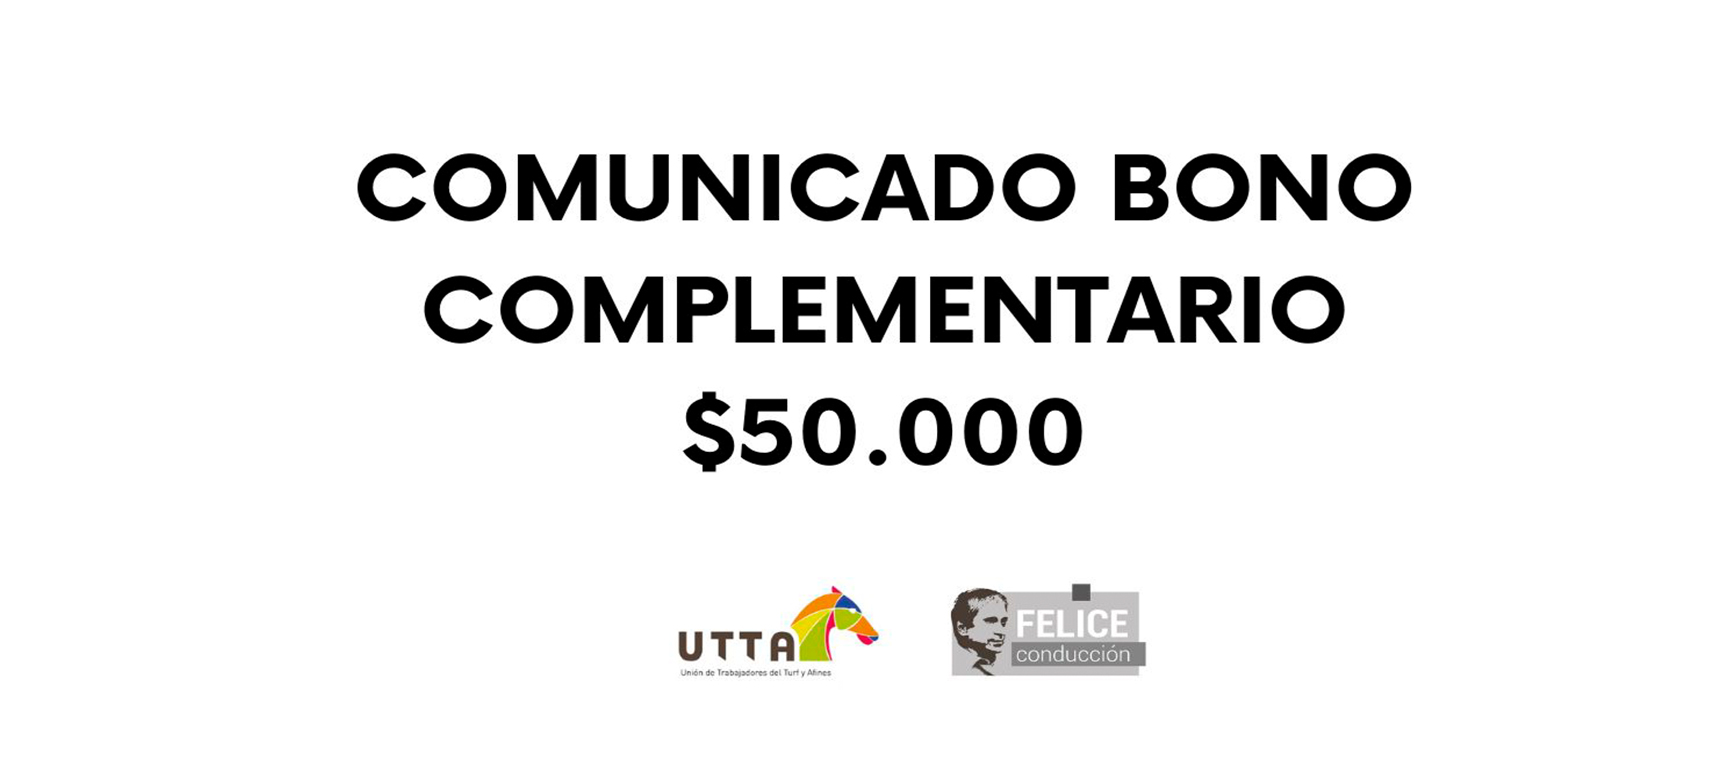 Bono Complementario $50.000